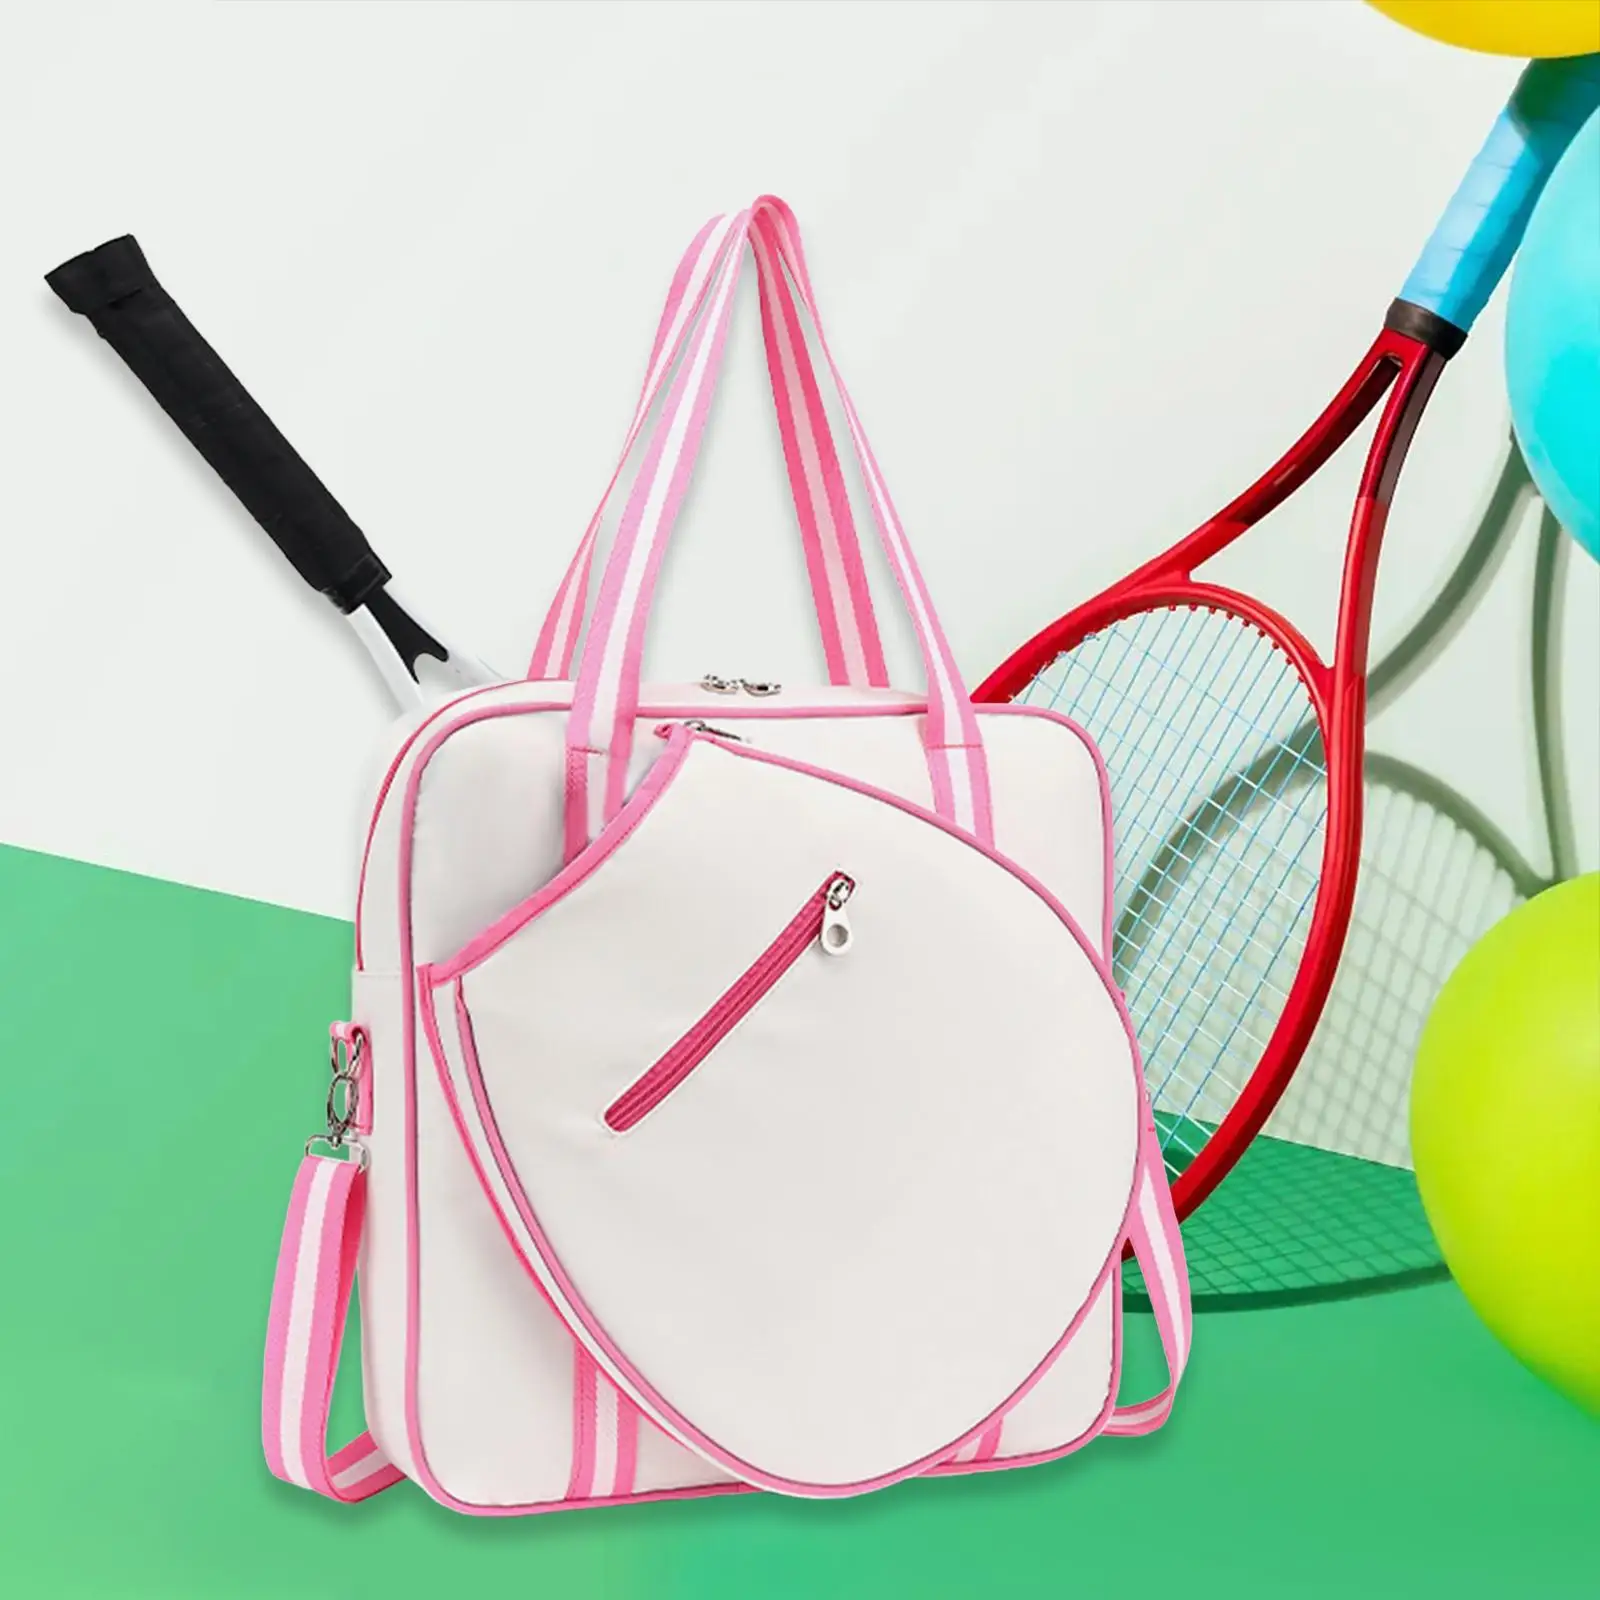 Tennis Shoulder Bag Sports Handbag Versatile Stylish with Multi Pockets Anti Scratches for Pickleball Paddles, Badminton Racquet